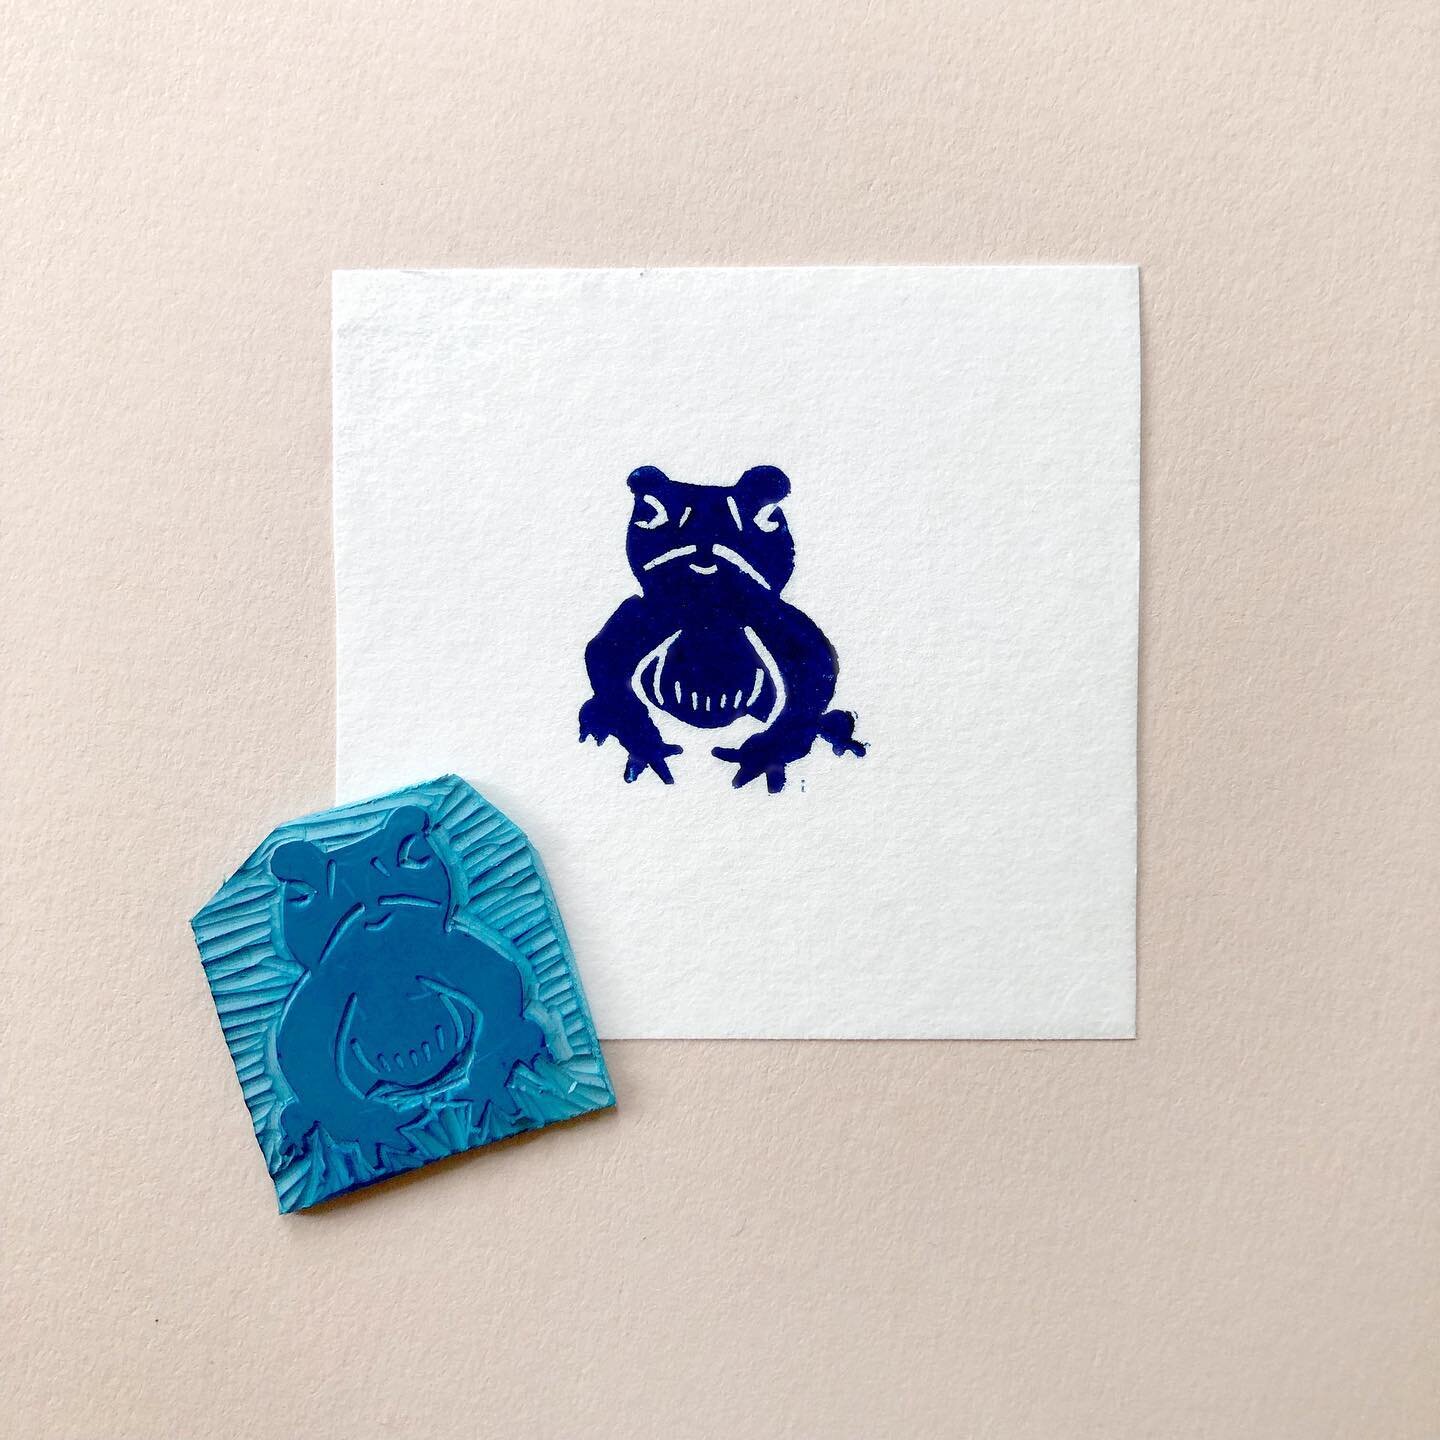 Just a little toad for #tinyprinttuesday 

#lino #linocut #print #newprint #blockprint #smallprint #toad #newink #miniprint #printmaker #illustrator #print #printisntdead #handcarved #printdesign #printlover